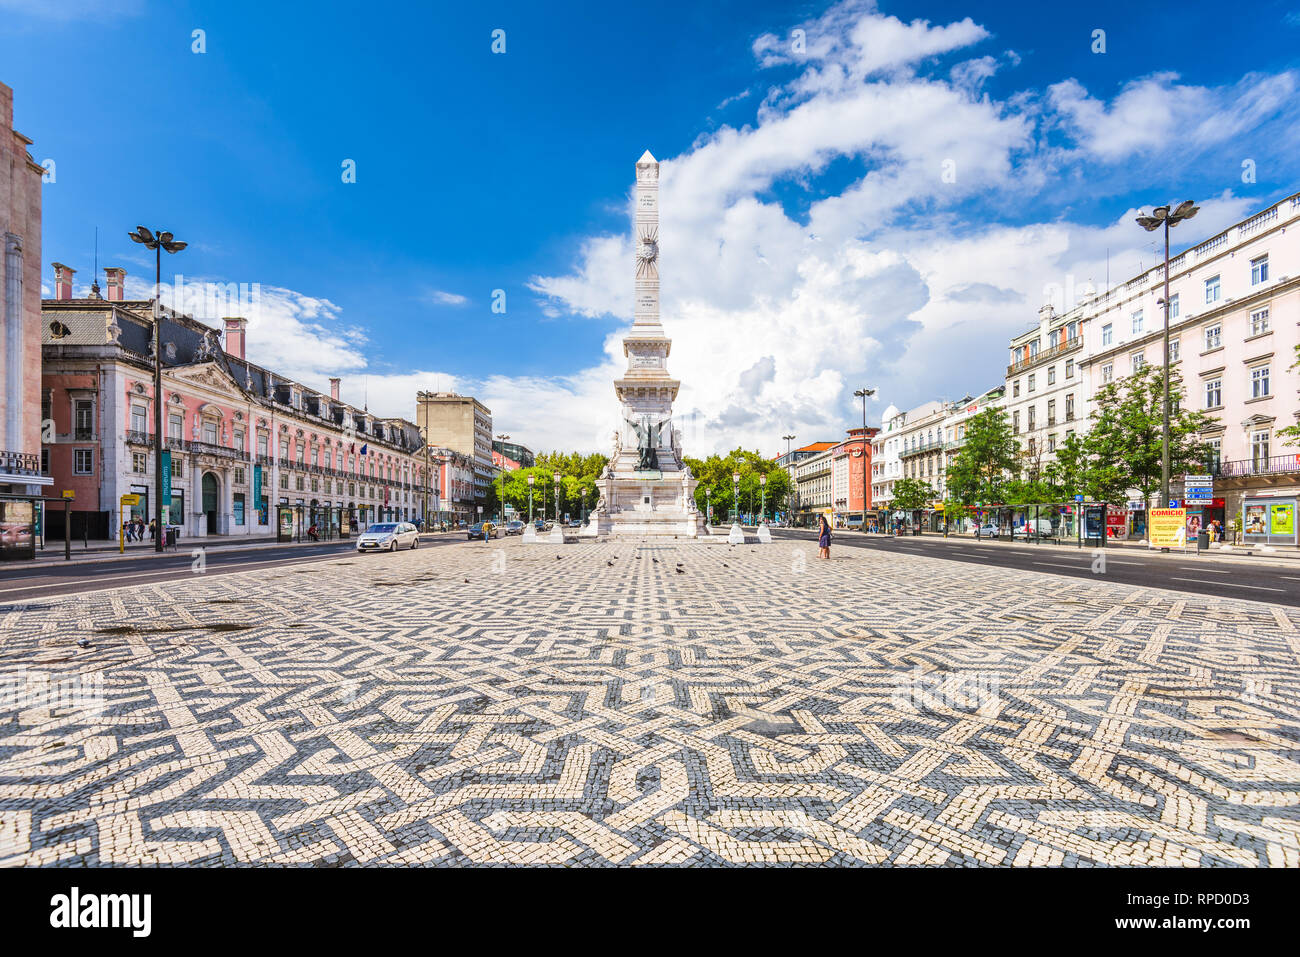 Lisbona, Portogallo - 21 ottobre 2014: Monumento a restauratori di Lisbona. Foto Stock